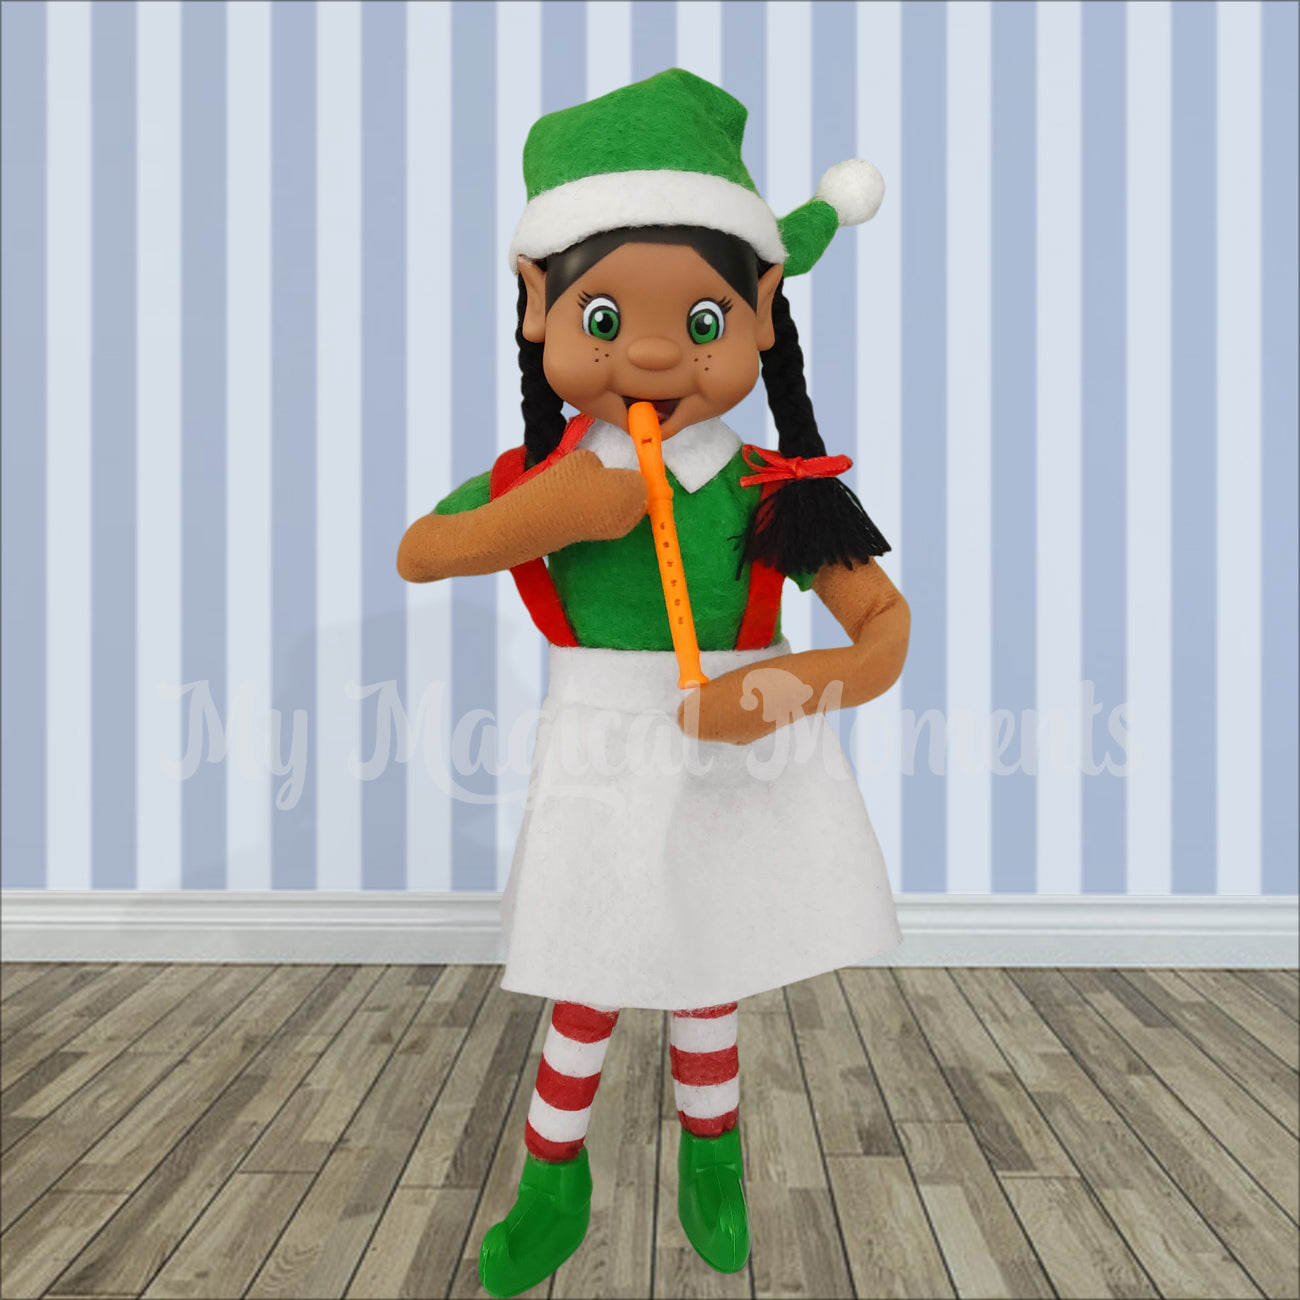 Elf holding an orange mini recorder prop